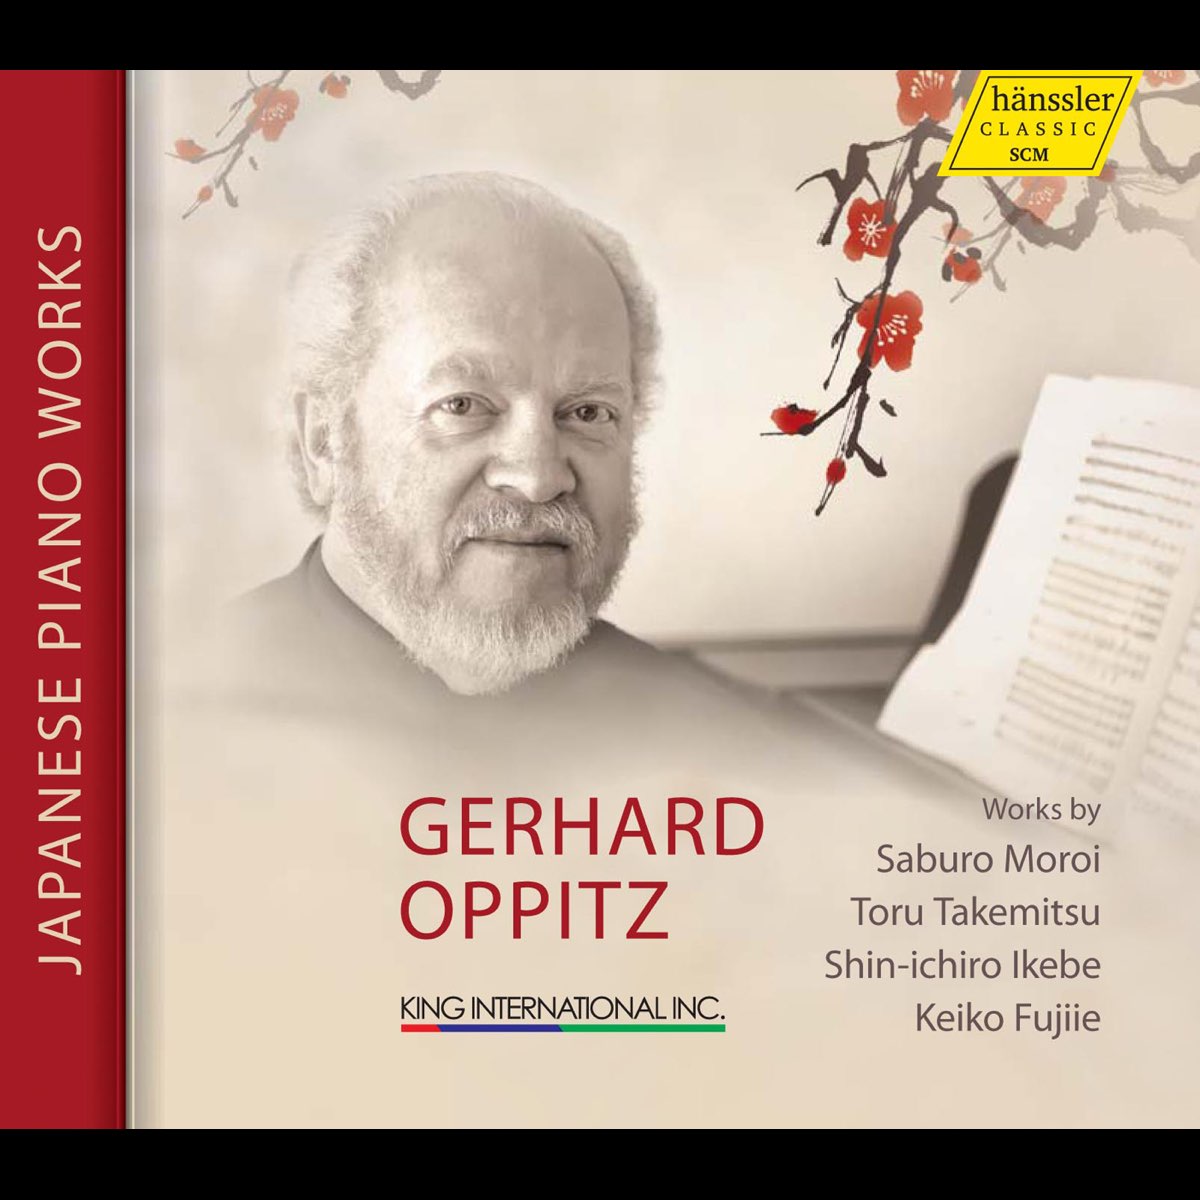 Japanese Piano Works - Album by Gerhard Oppitz - Apple Music